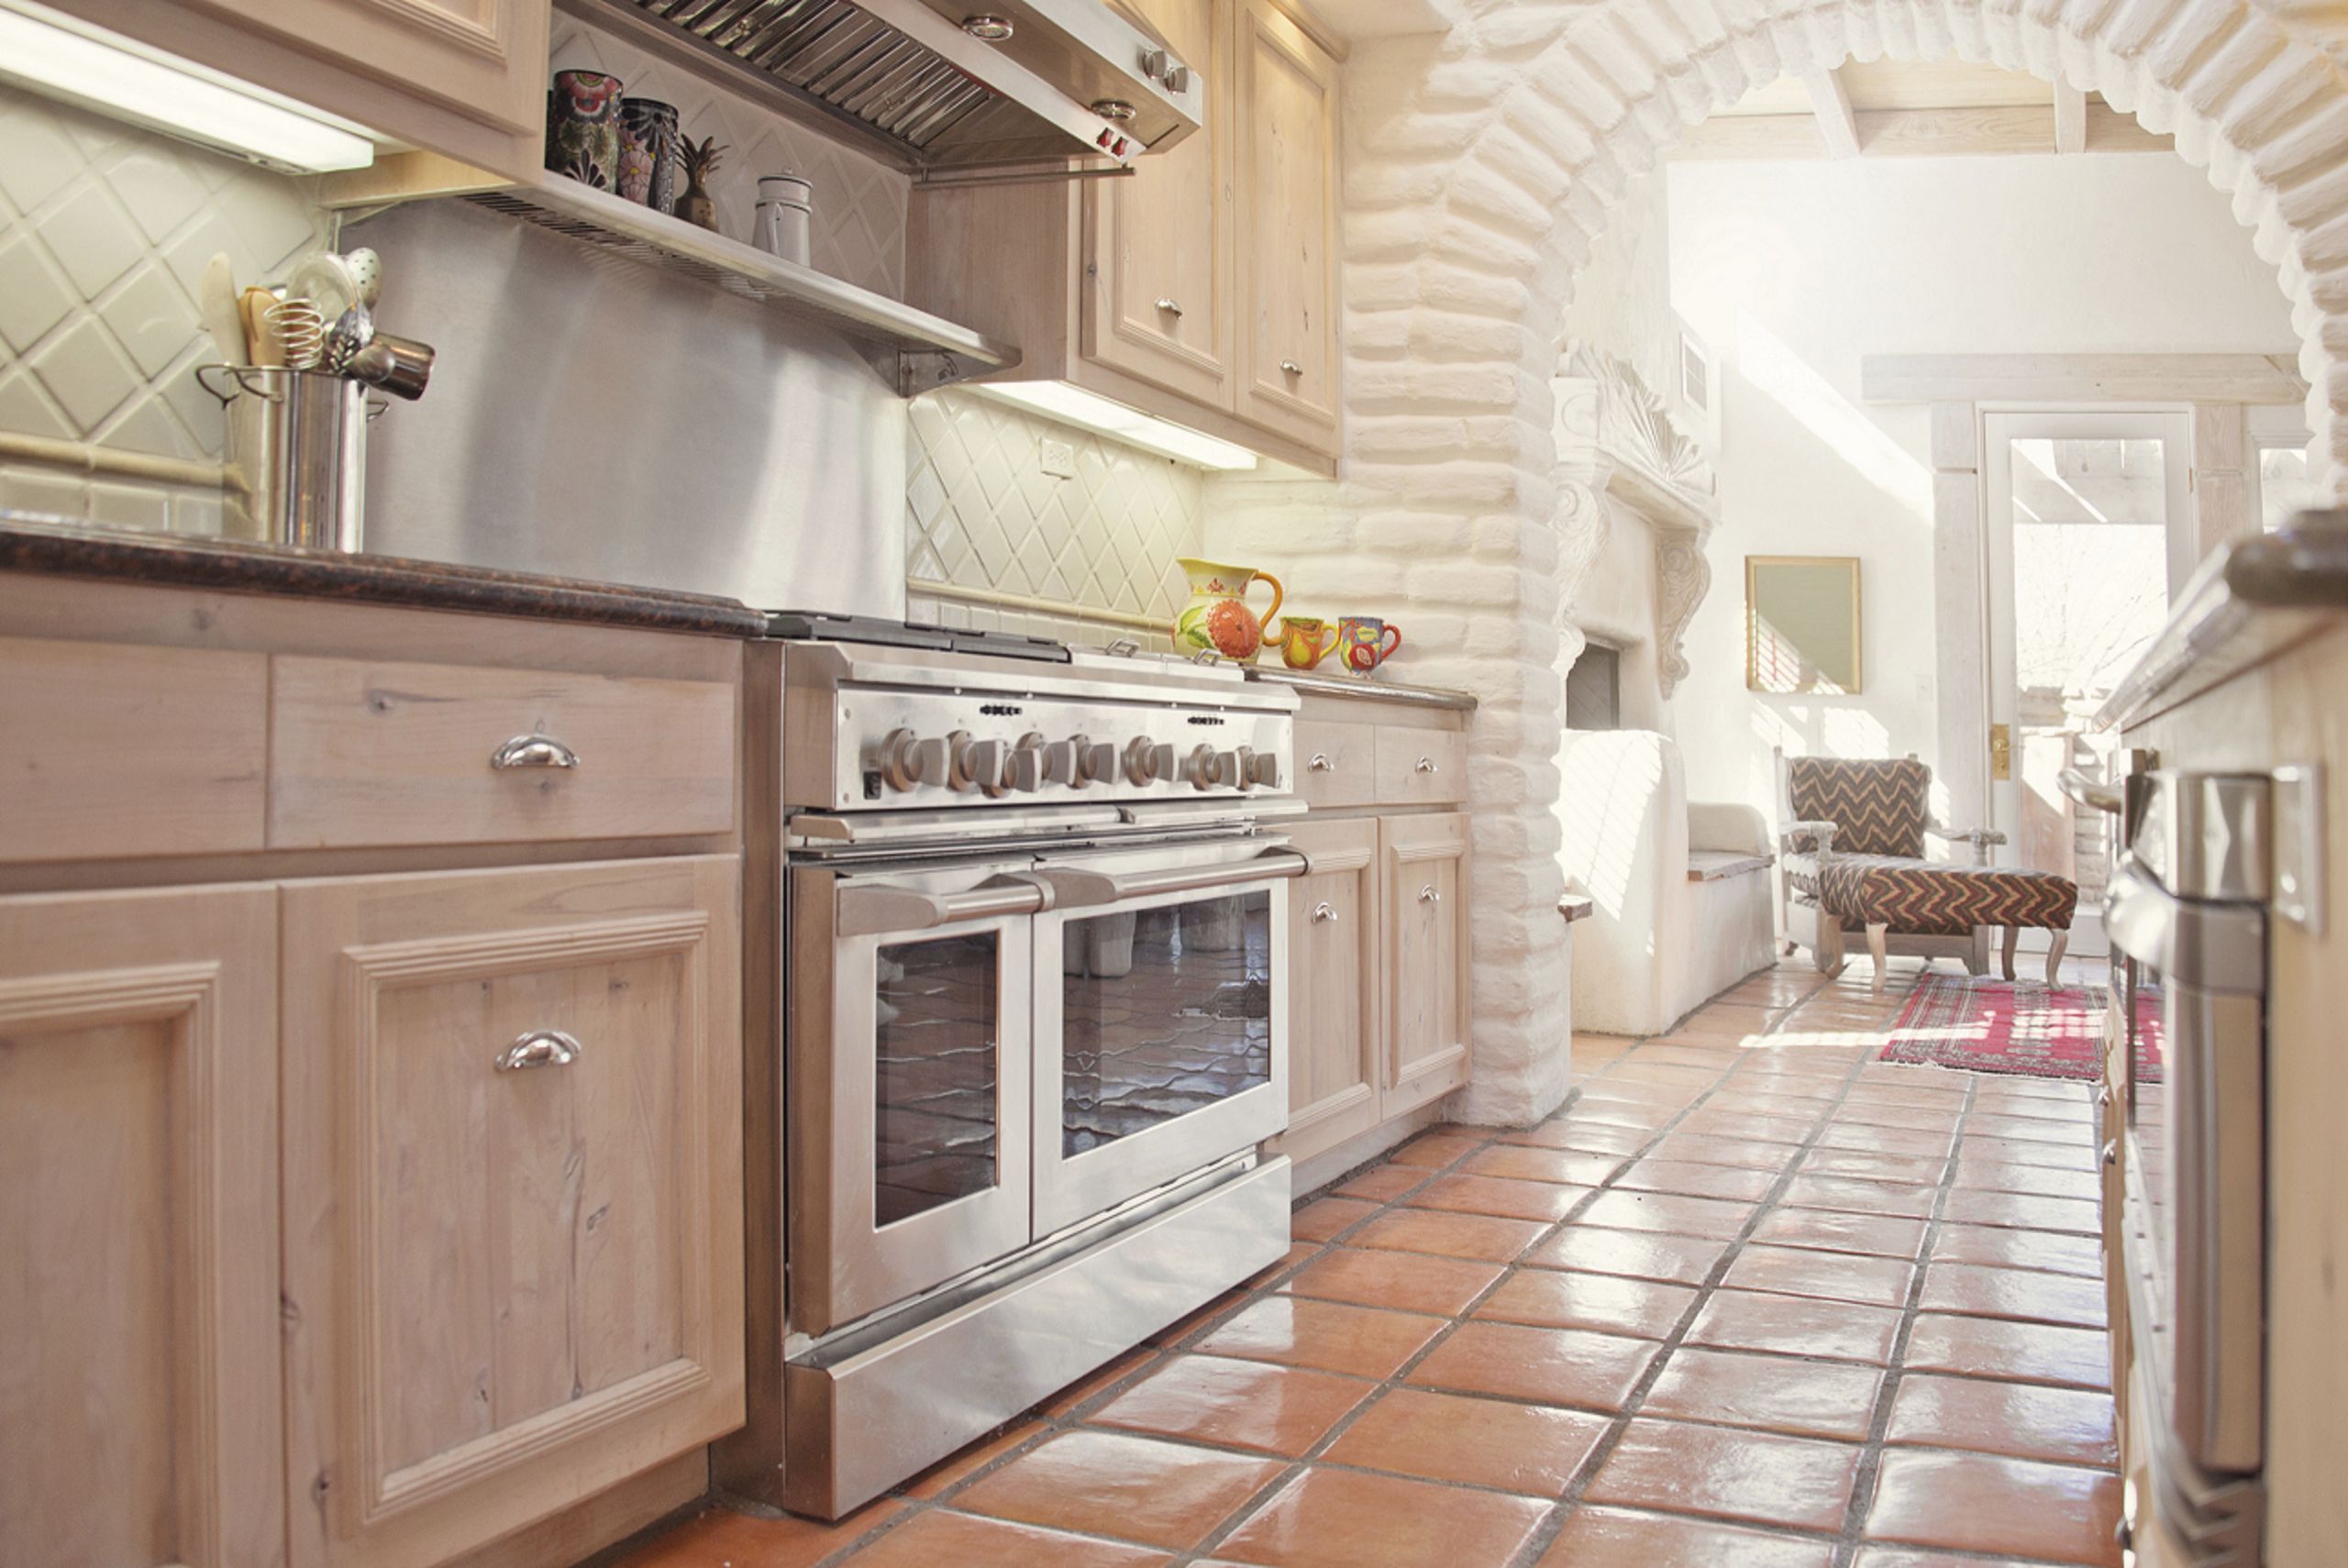 Terracotta Kitchen Floor Tiles
 How to a Mediterranean style kitchen